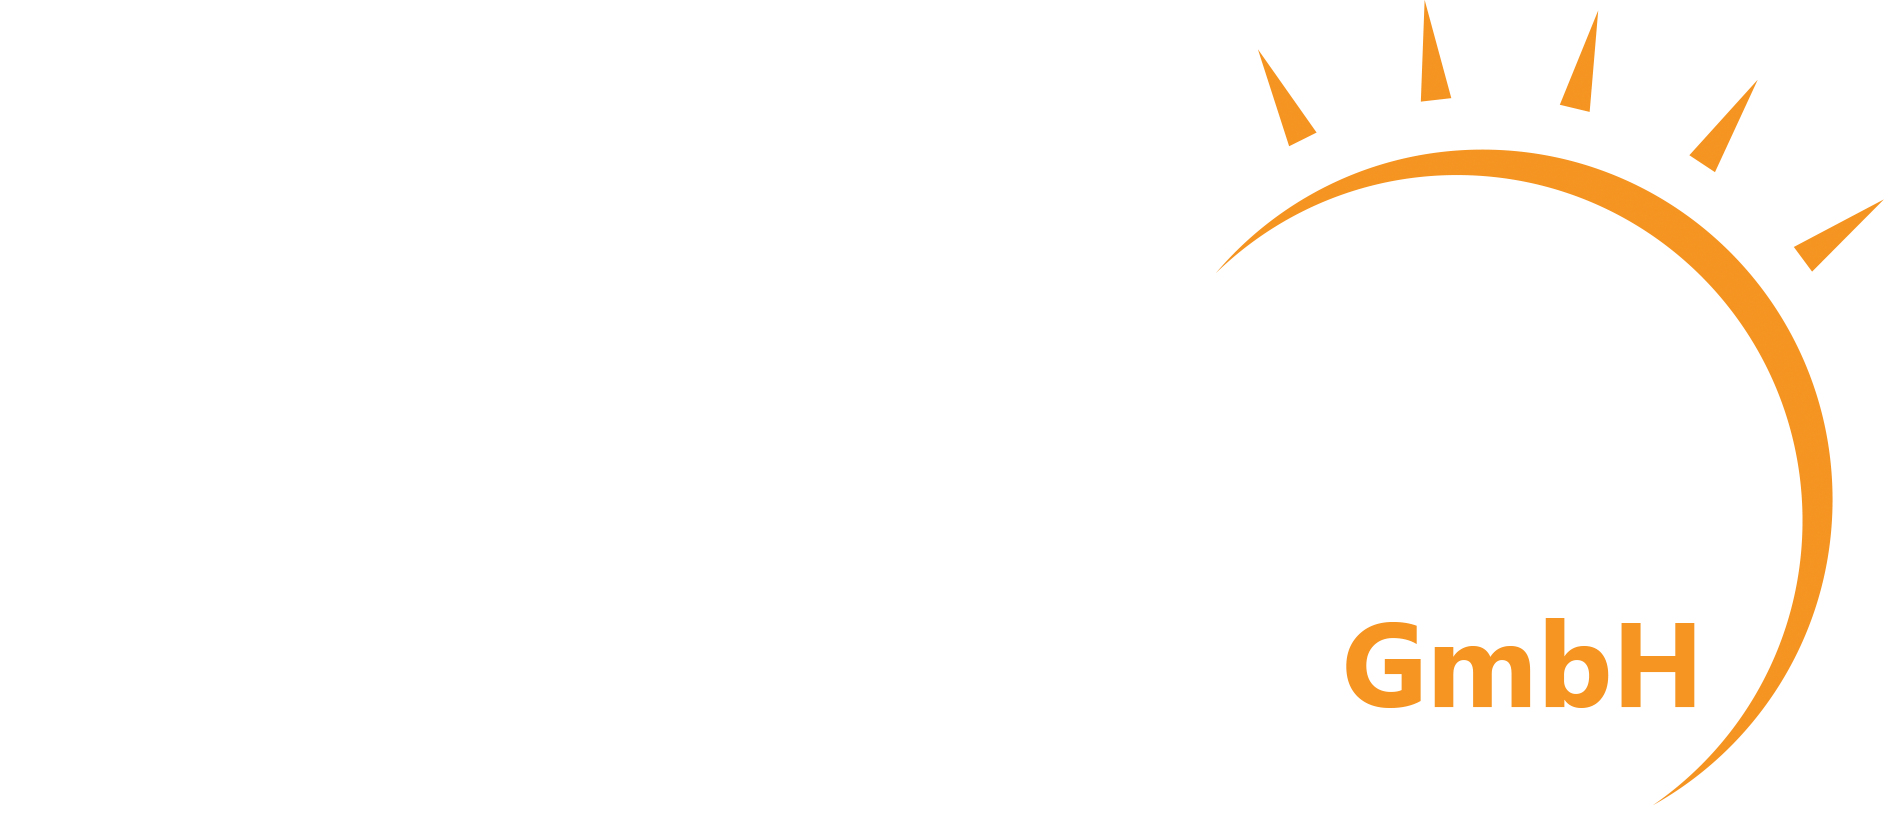 Soliva GmbH